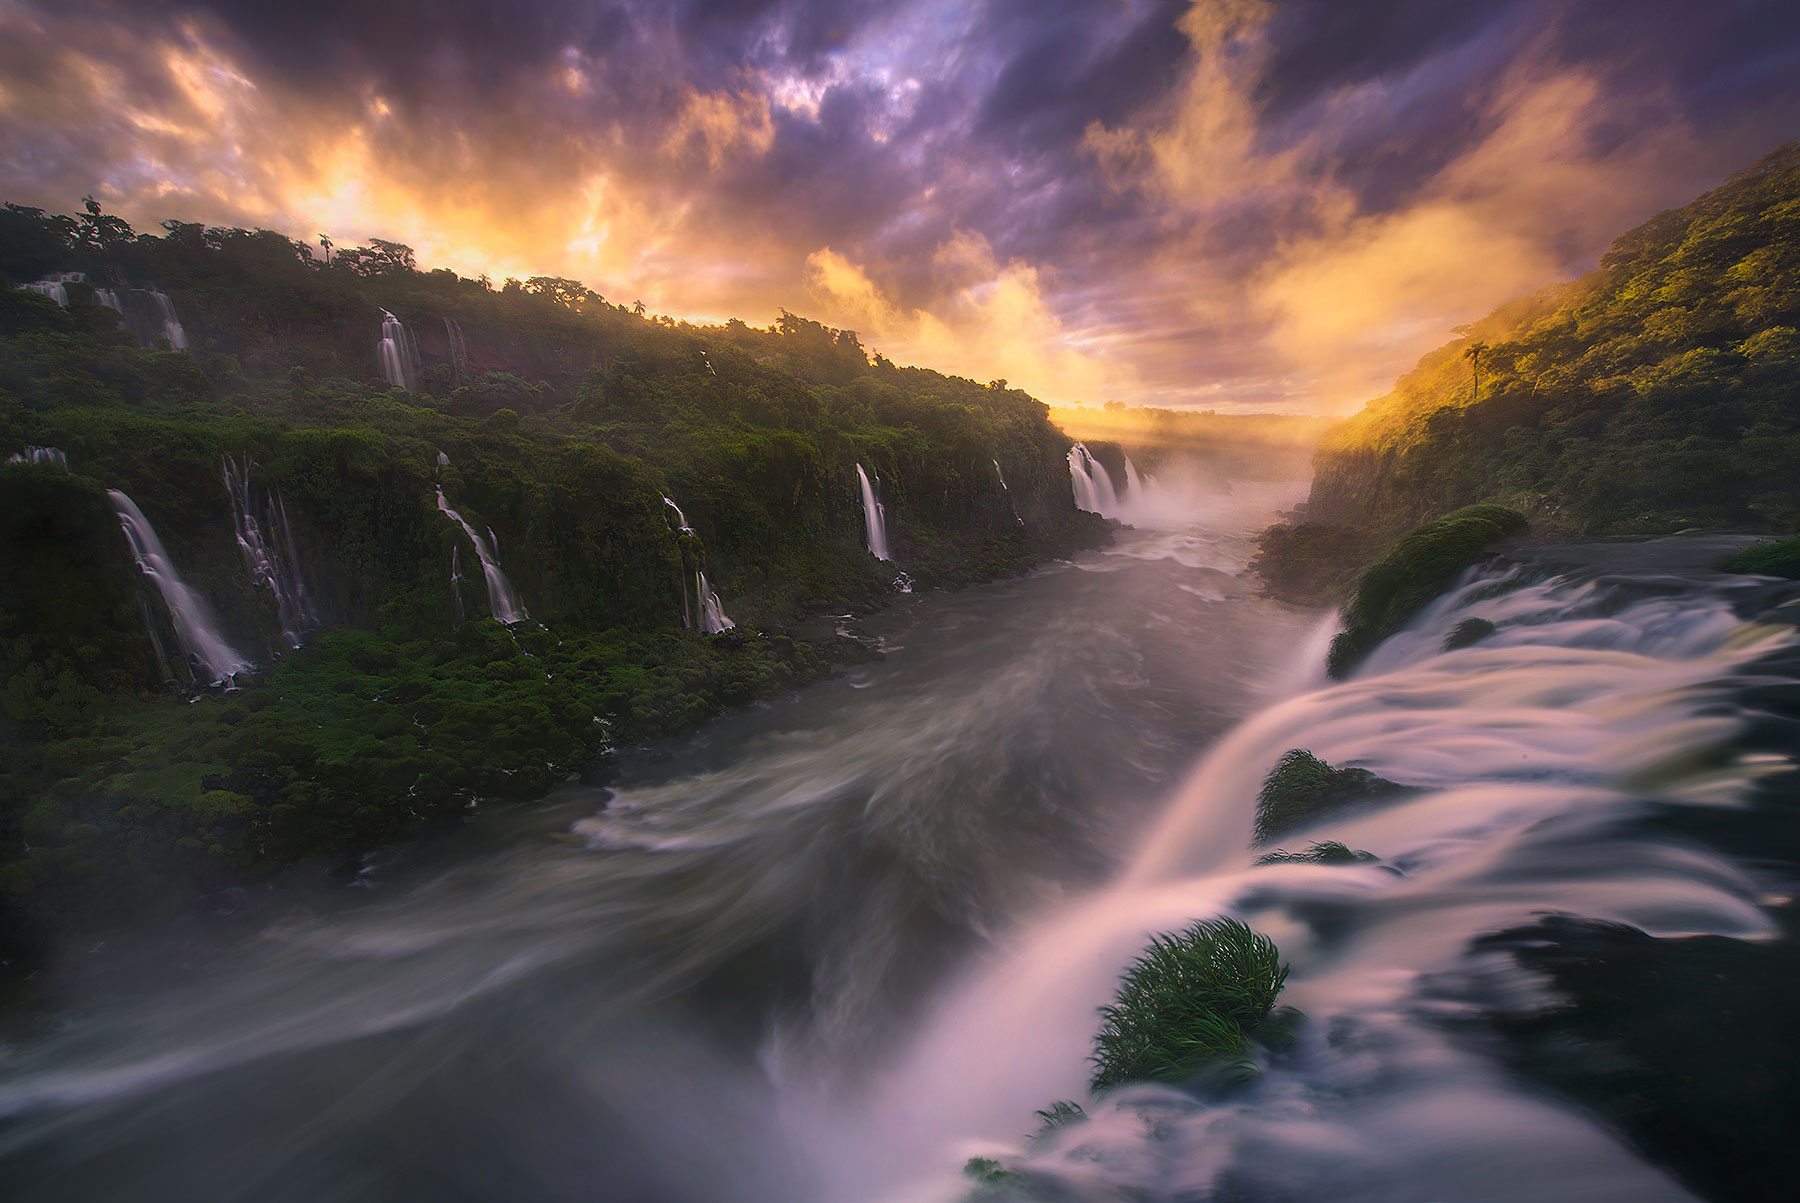 The amazing layers of waterfalls at Iguazu and some fiery sunset light!